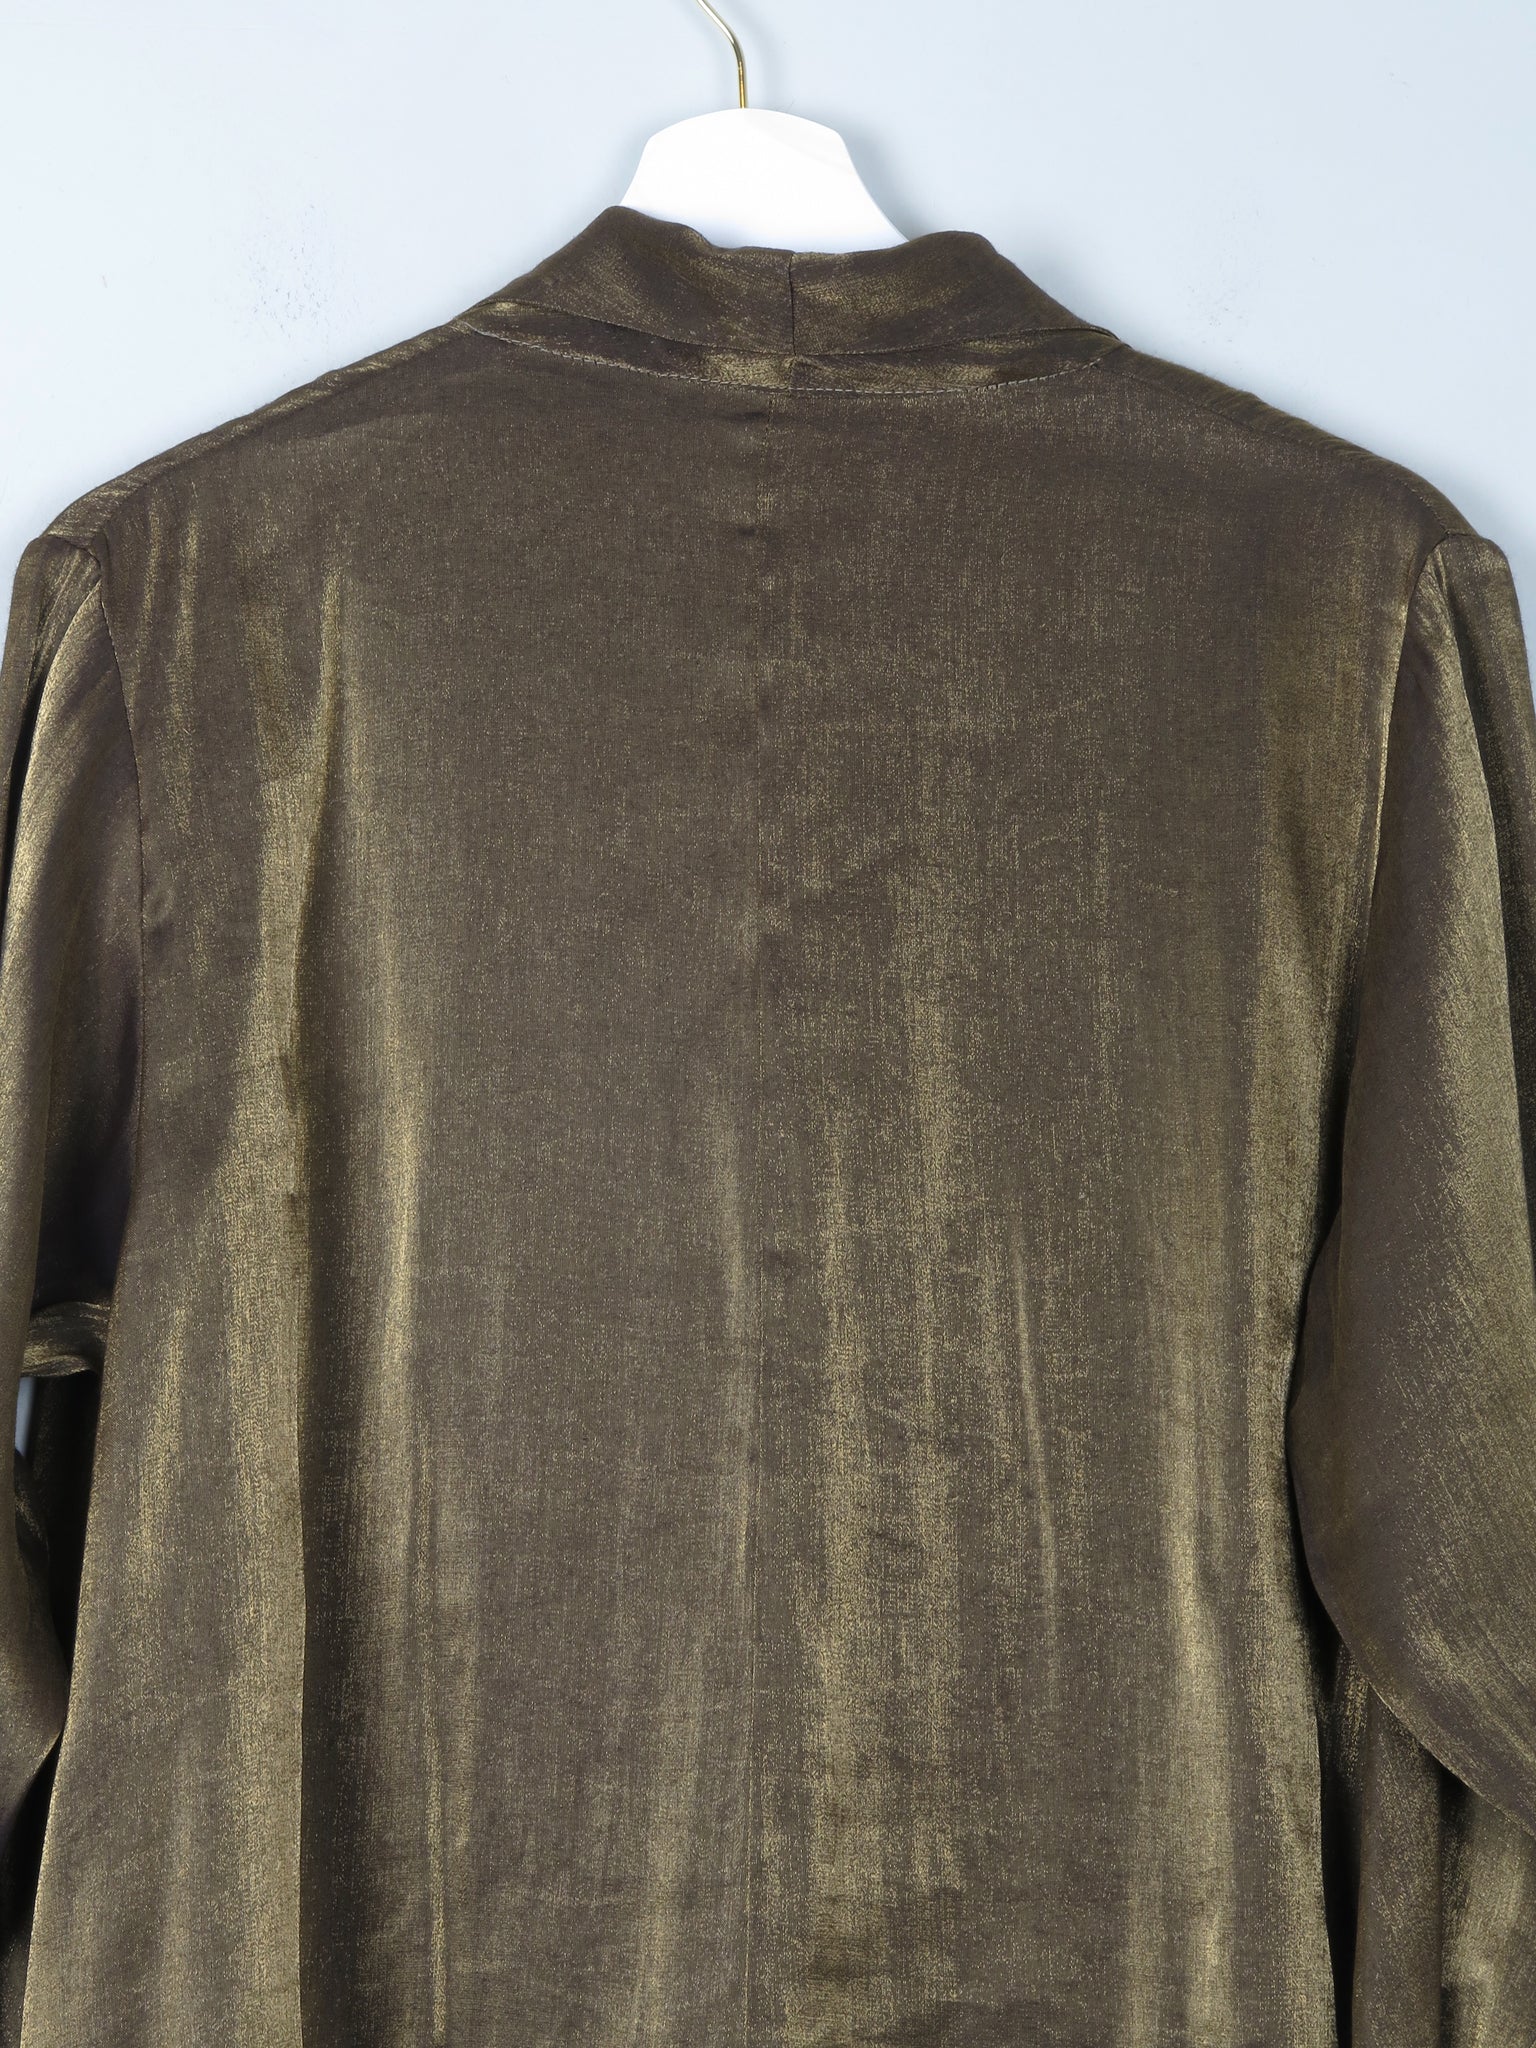 Women's Gold Lame Blouse/Jacket/Dress Oversized S/M/L/XL